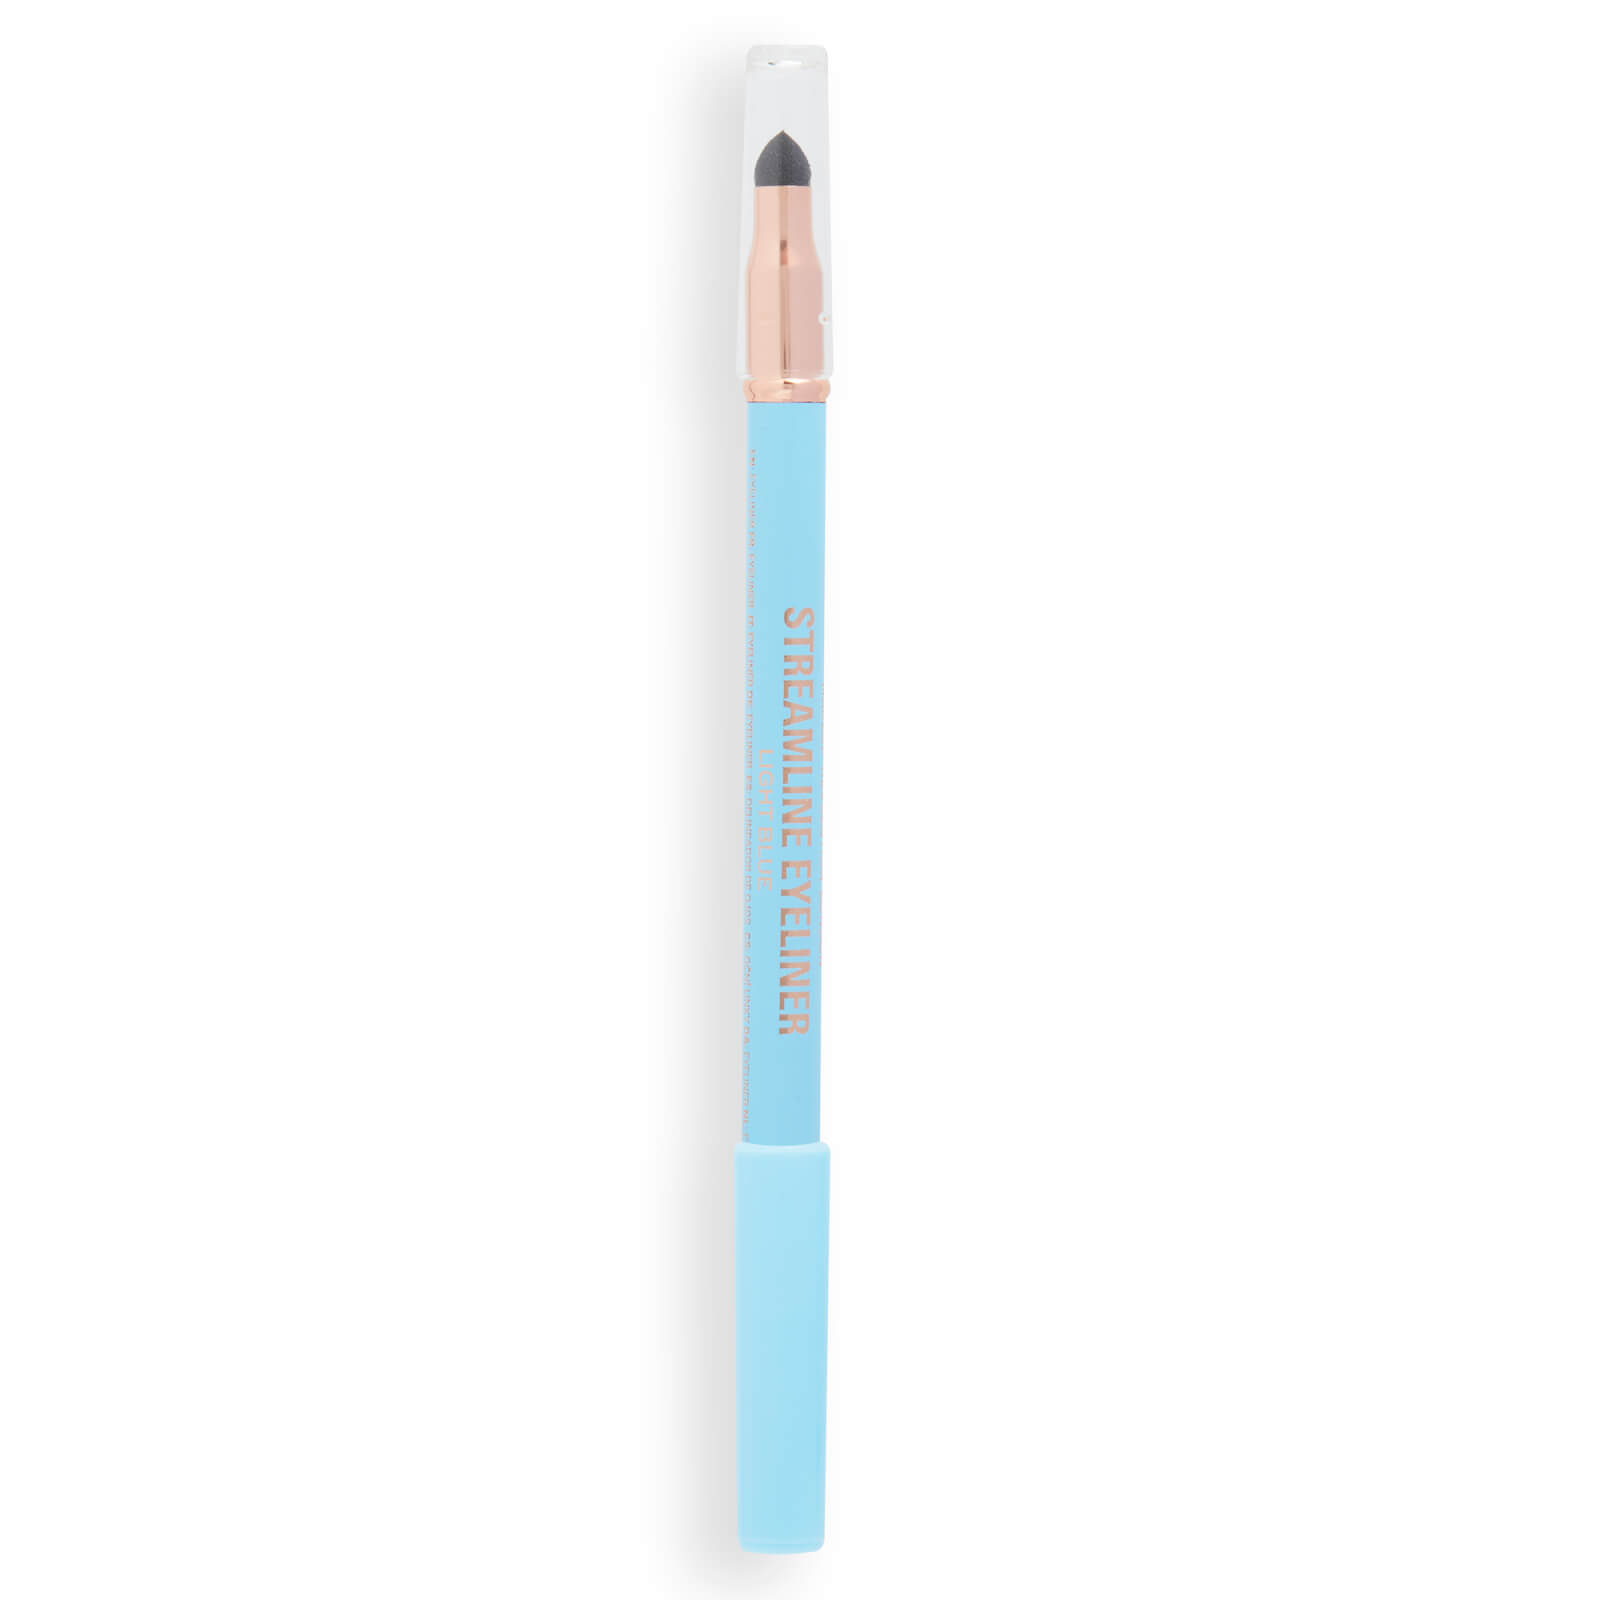 Makeup Revolution Streamline Waterline Eyeliner Pencil (Various Shades) - Blue